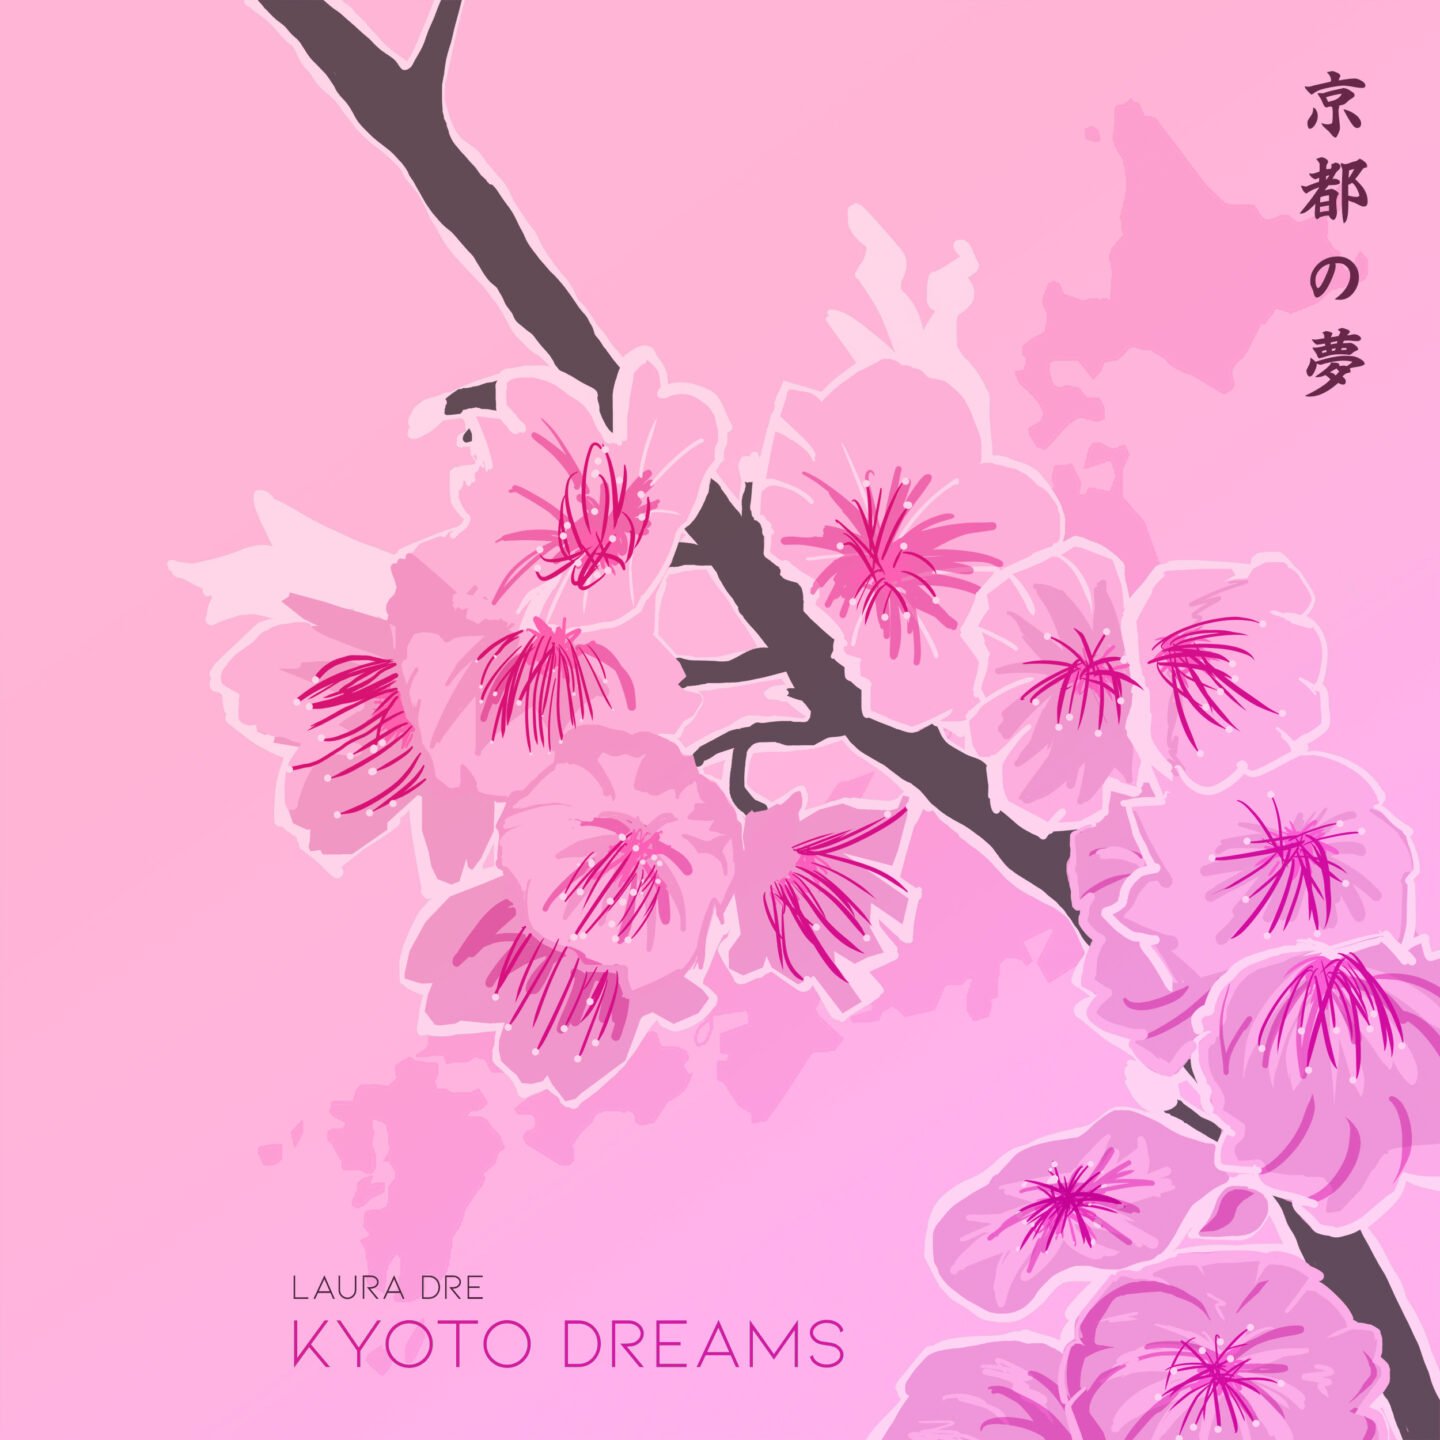 Protected: Bonus song “Kyoto Dreams”